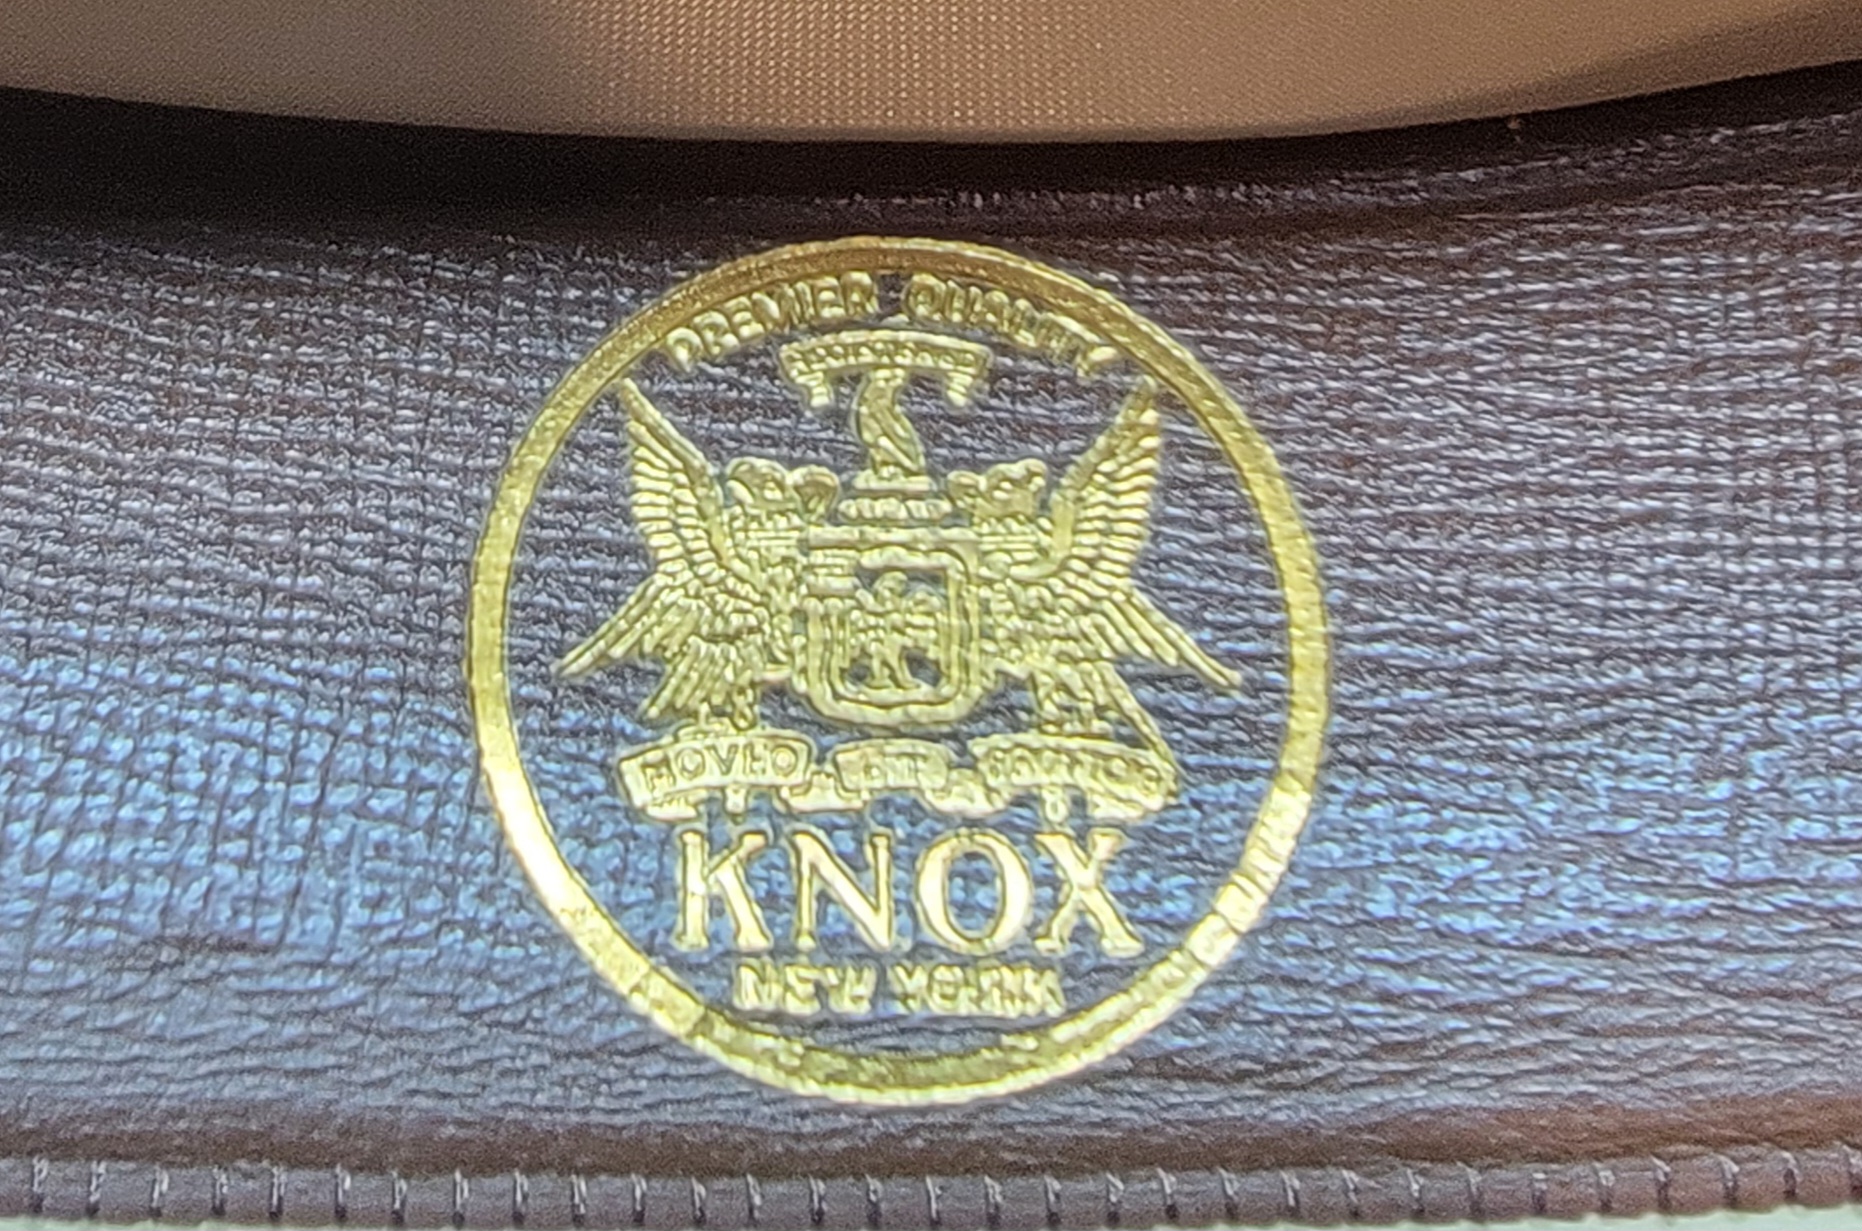 Knox OR clone 6.jpg